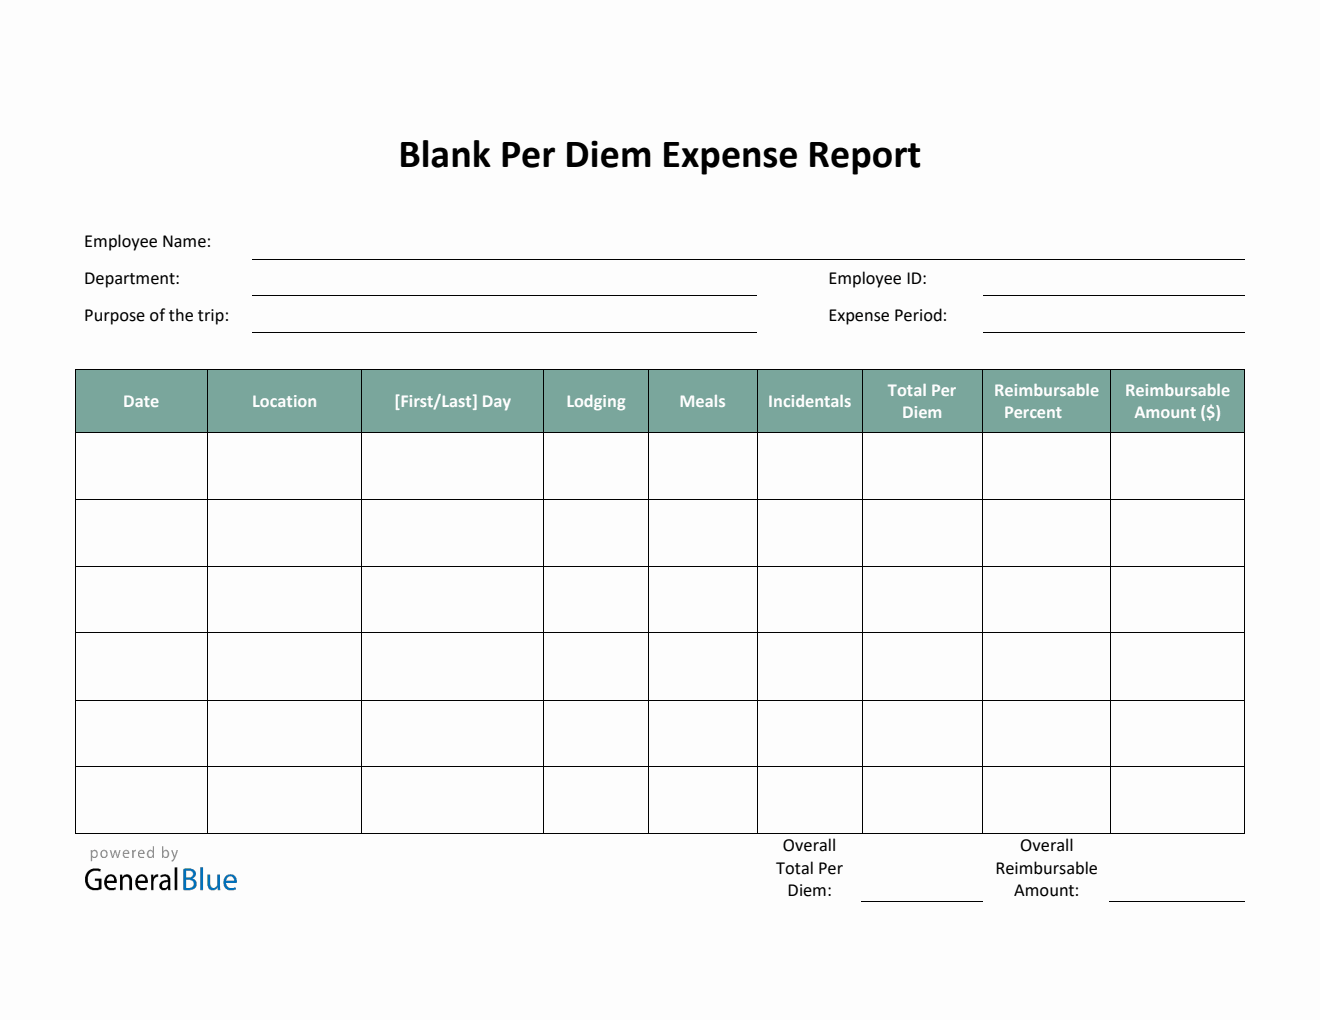 Blank Per Diem Expense Report Template in PDF (Green)